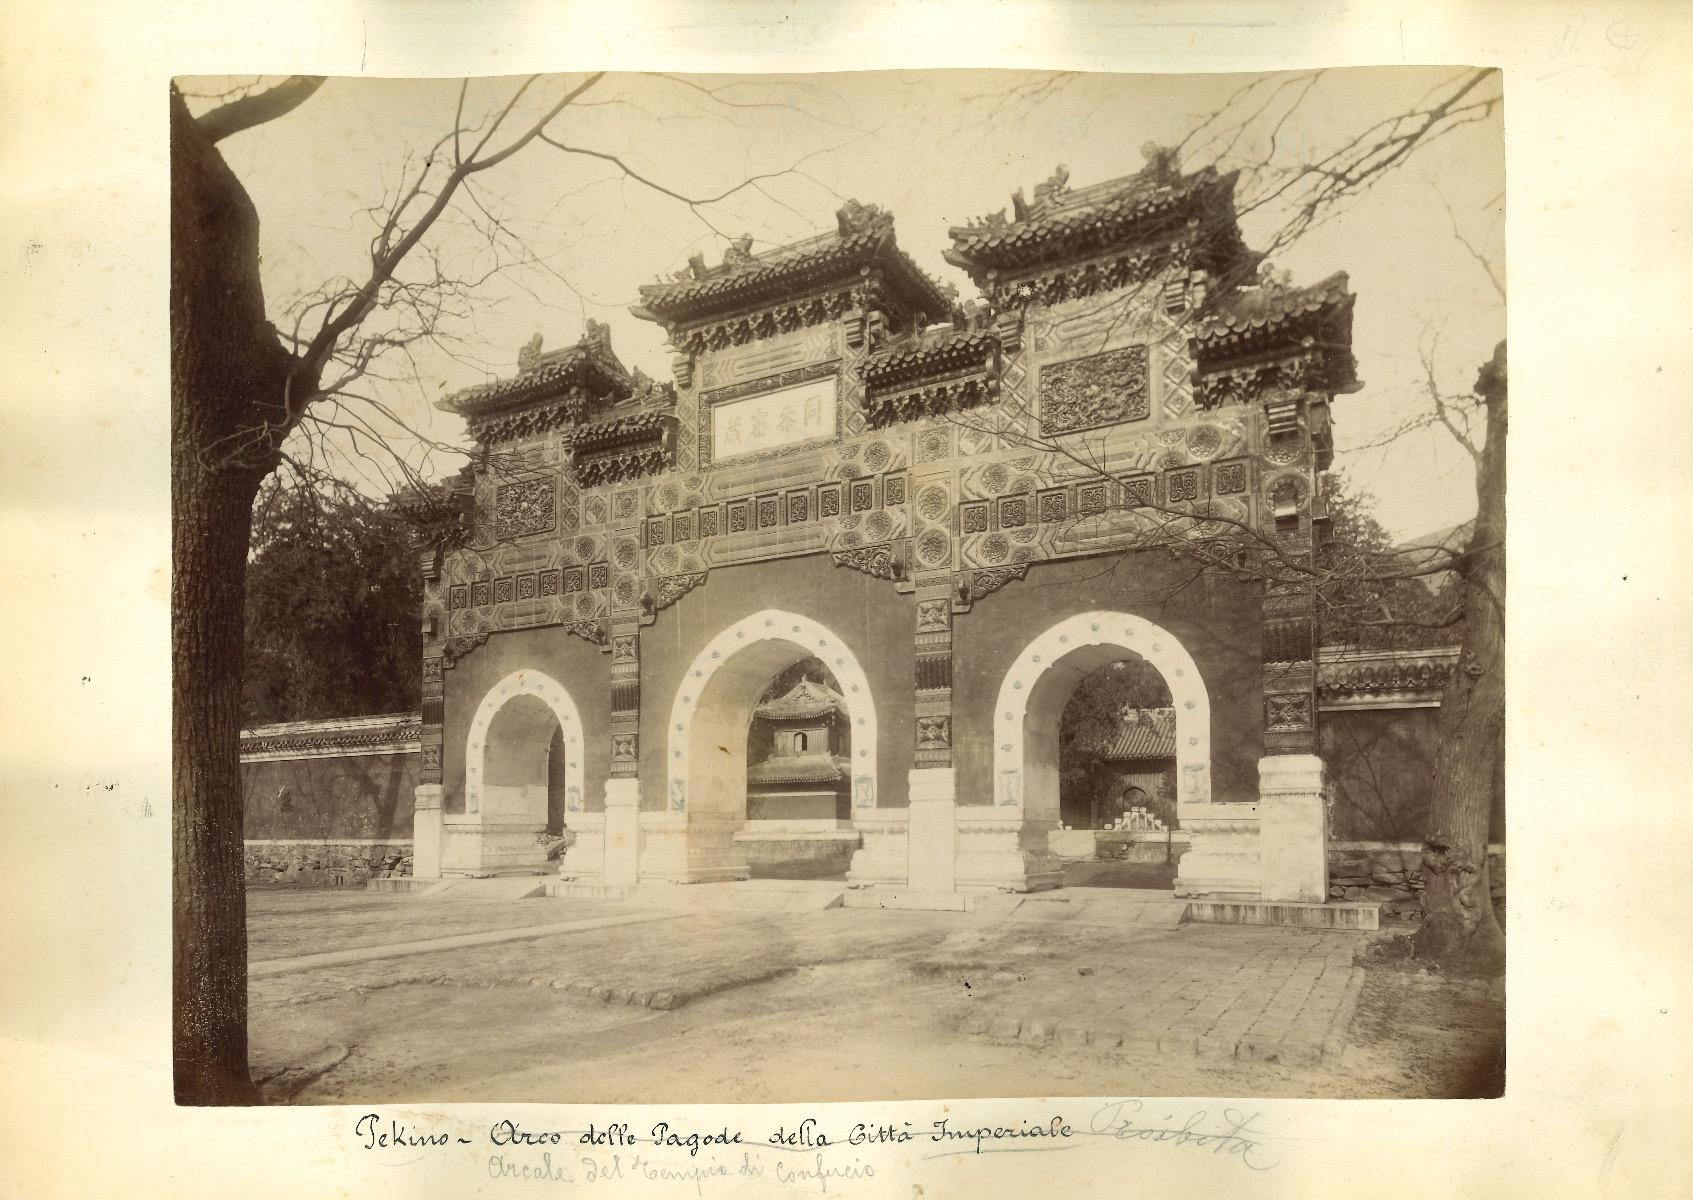 Unknown Landscape Photograph - Ancient Views of Beijing - The Forbidden City - Original Albumen Print - 1890s